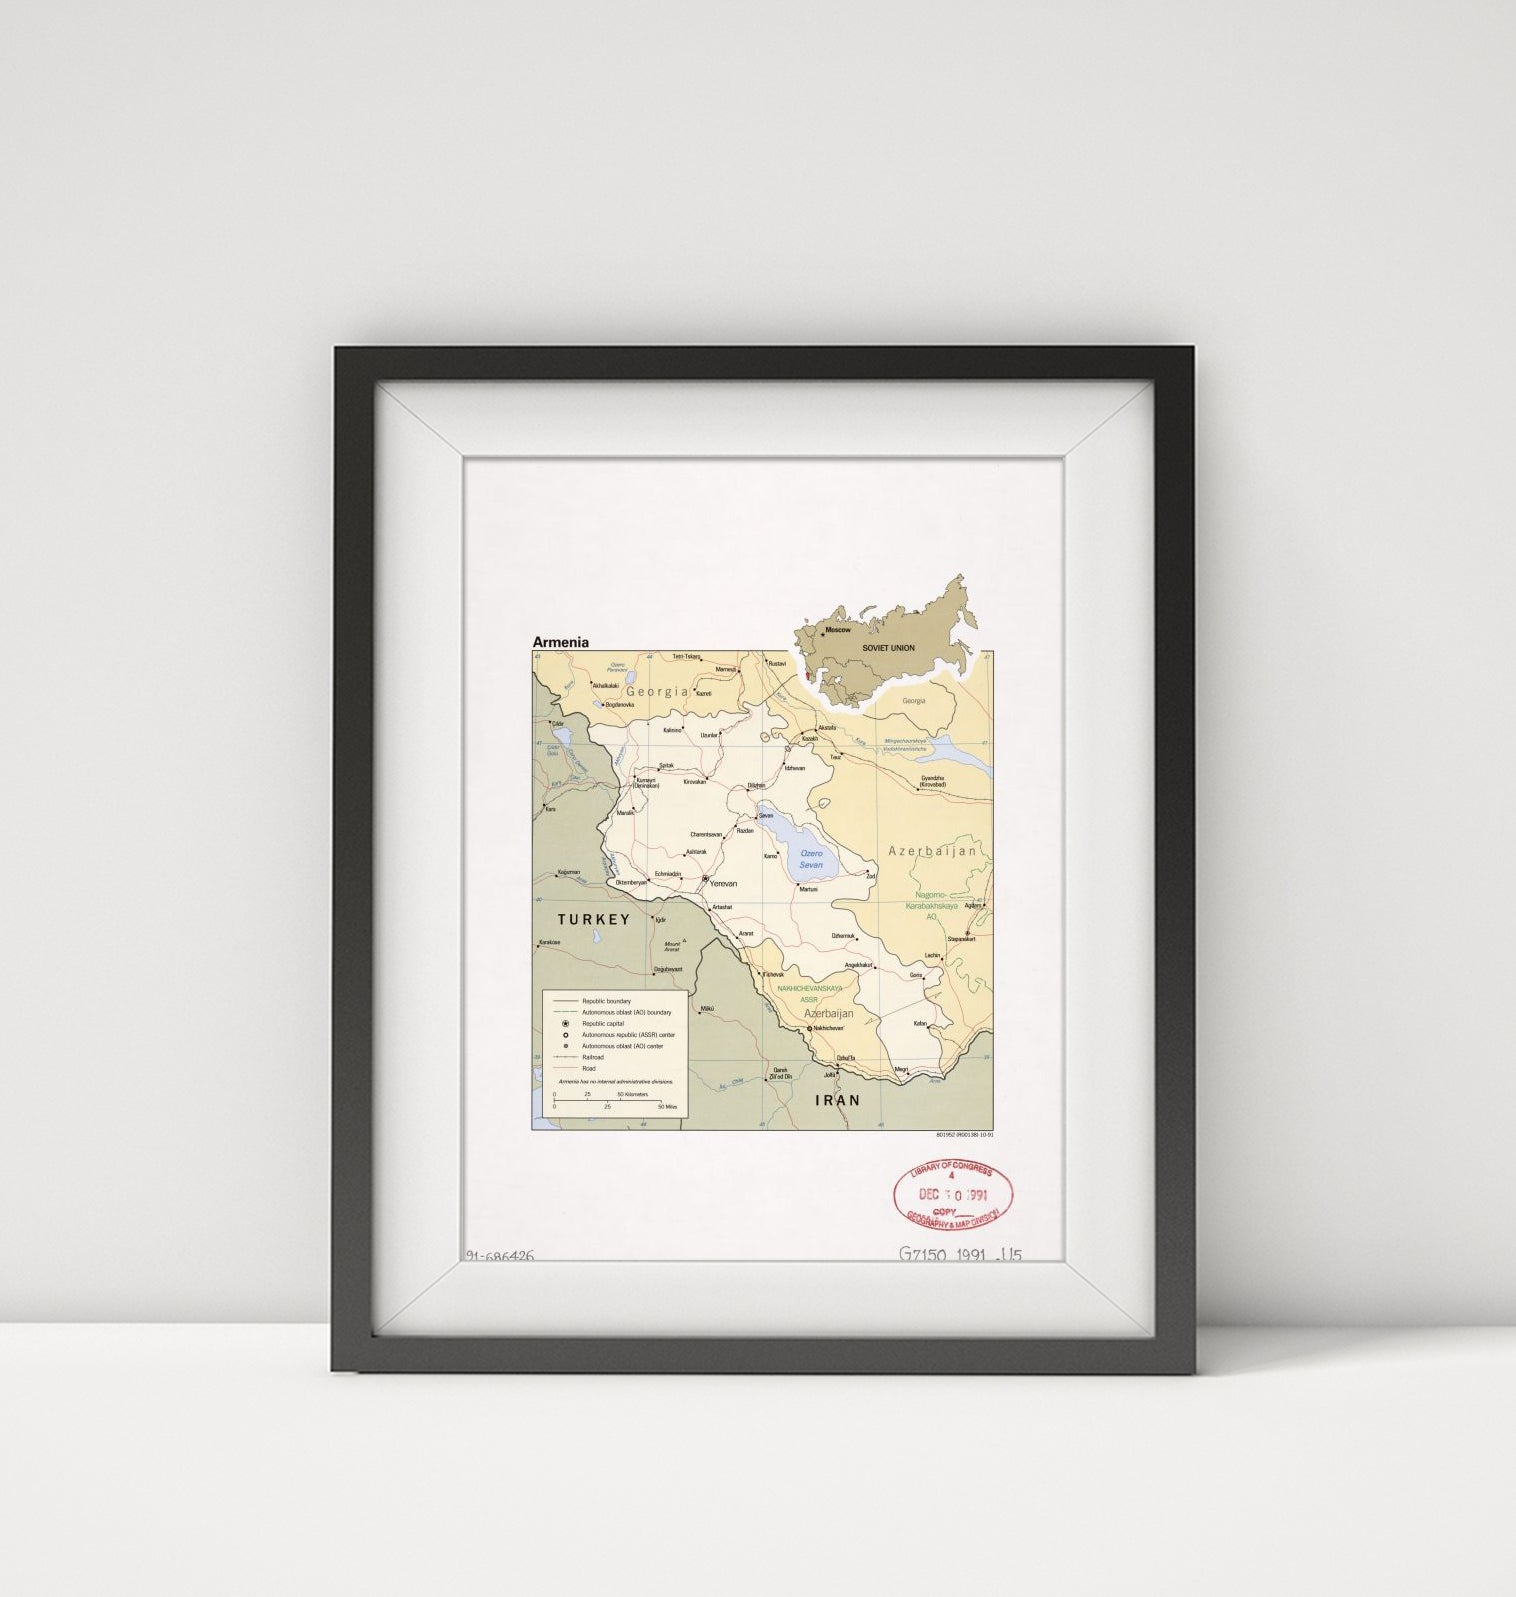 1991 Map | Armenia | Armenia Republic 10-91. Includes note and location map. "801952 (R00138)."